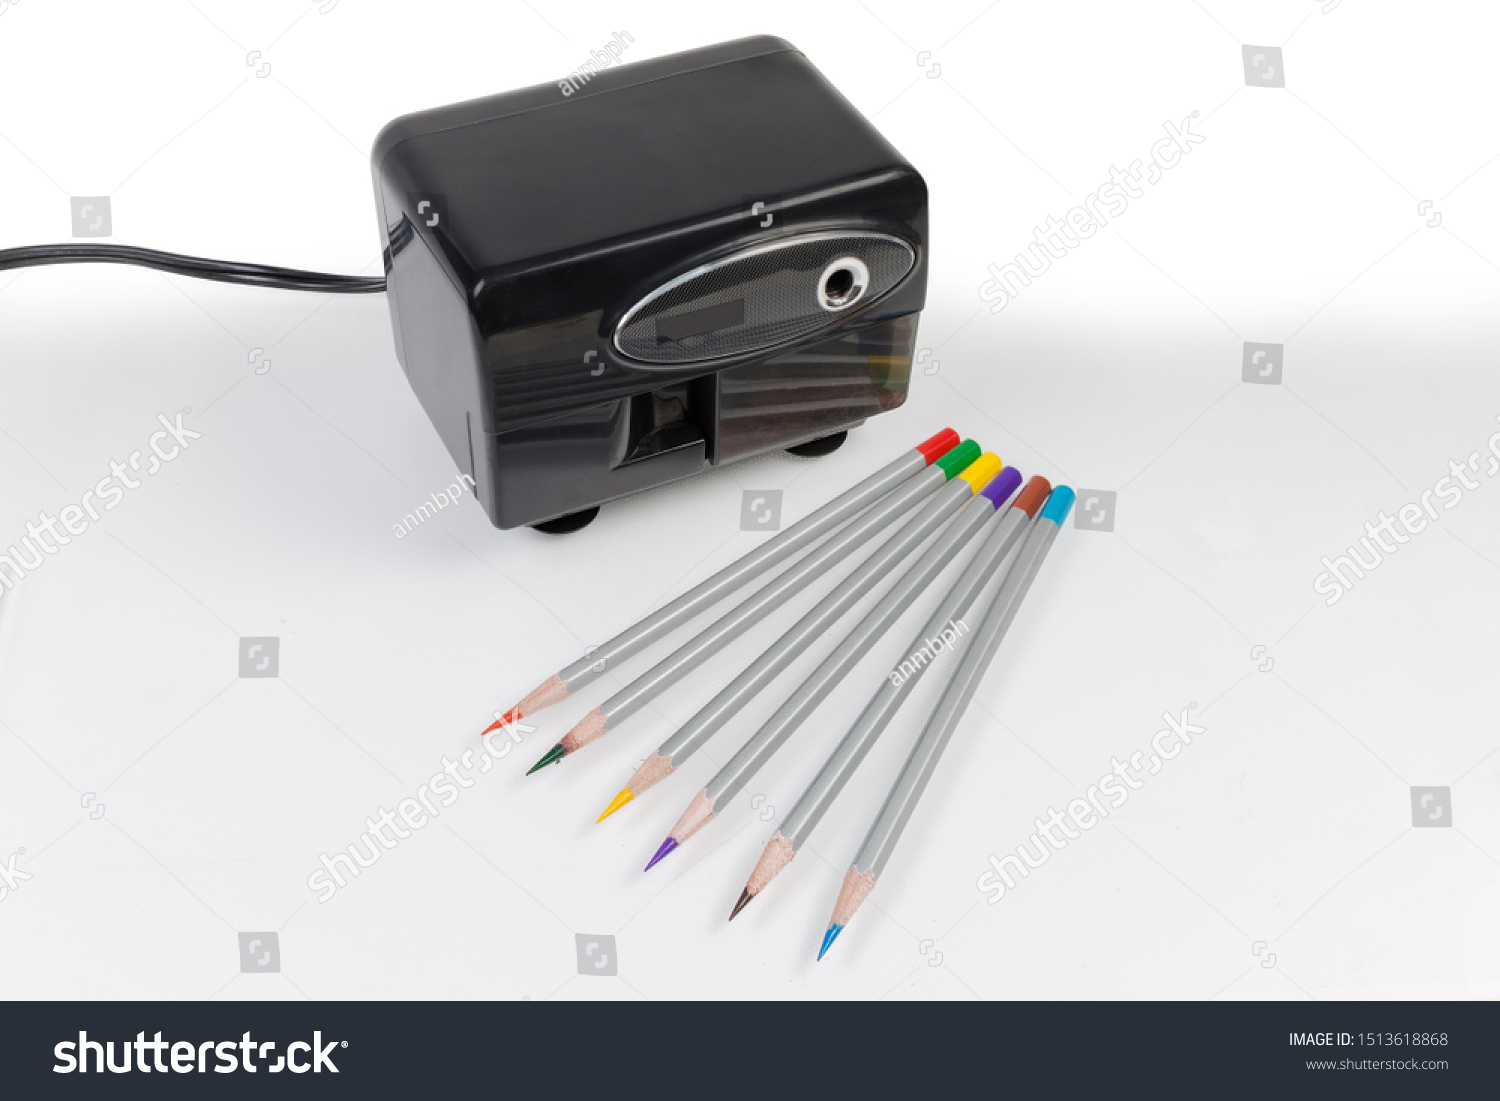 modern pencil sharpener